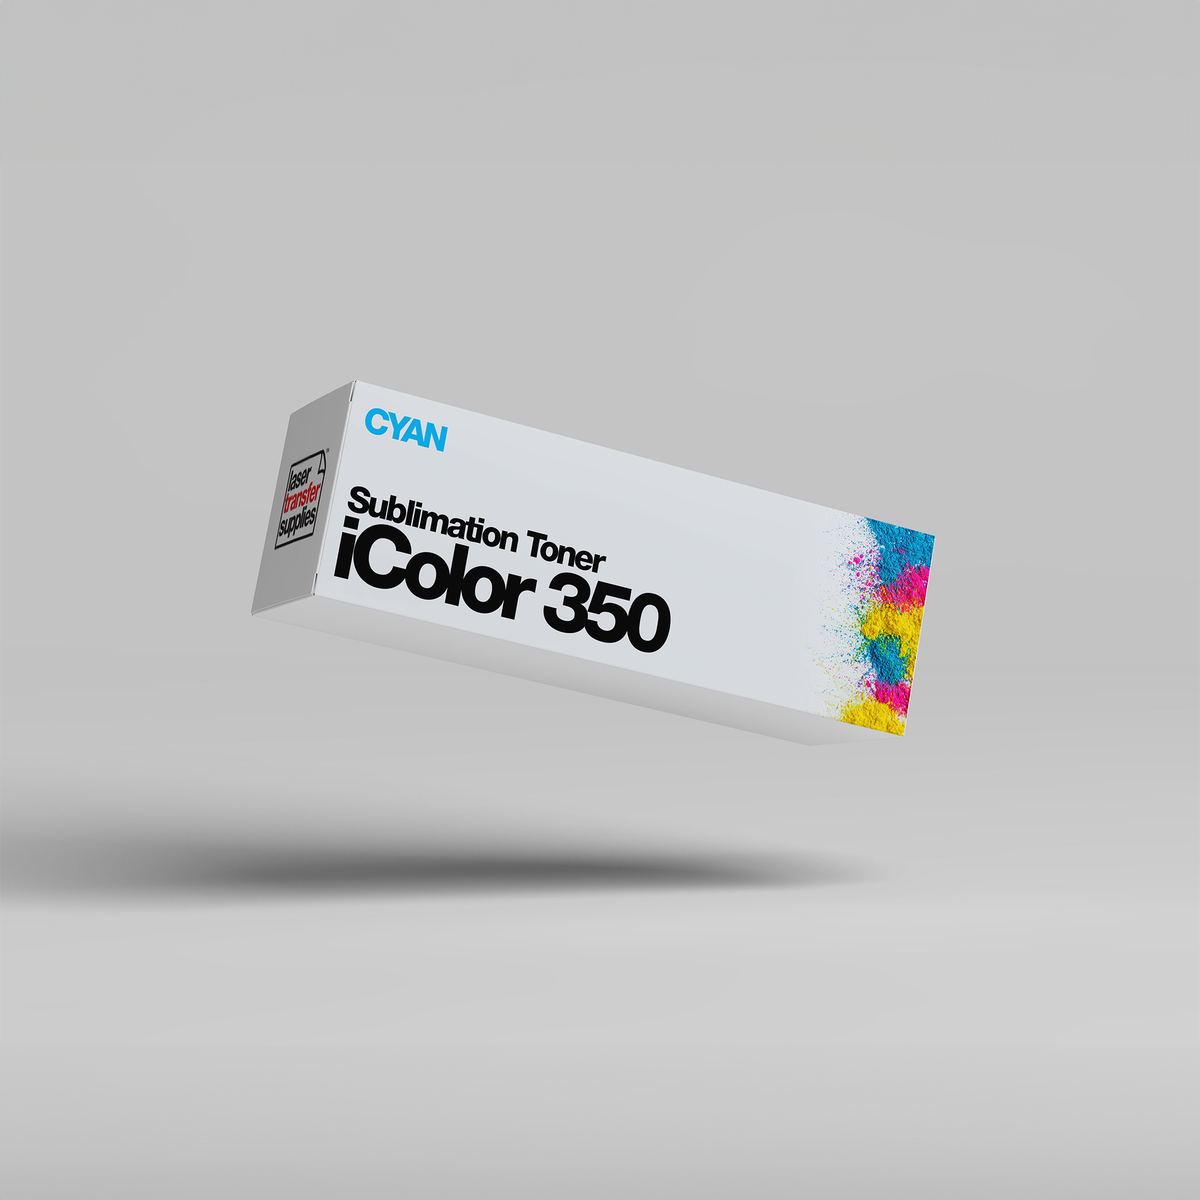 IColor 350 Sublimation Toner